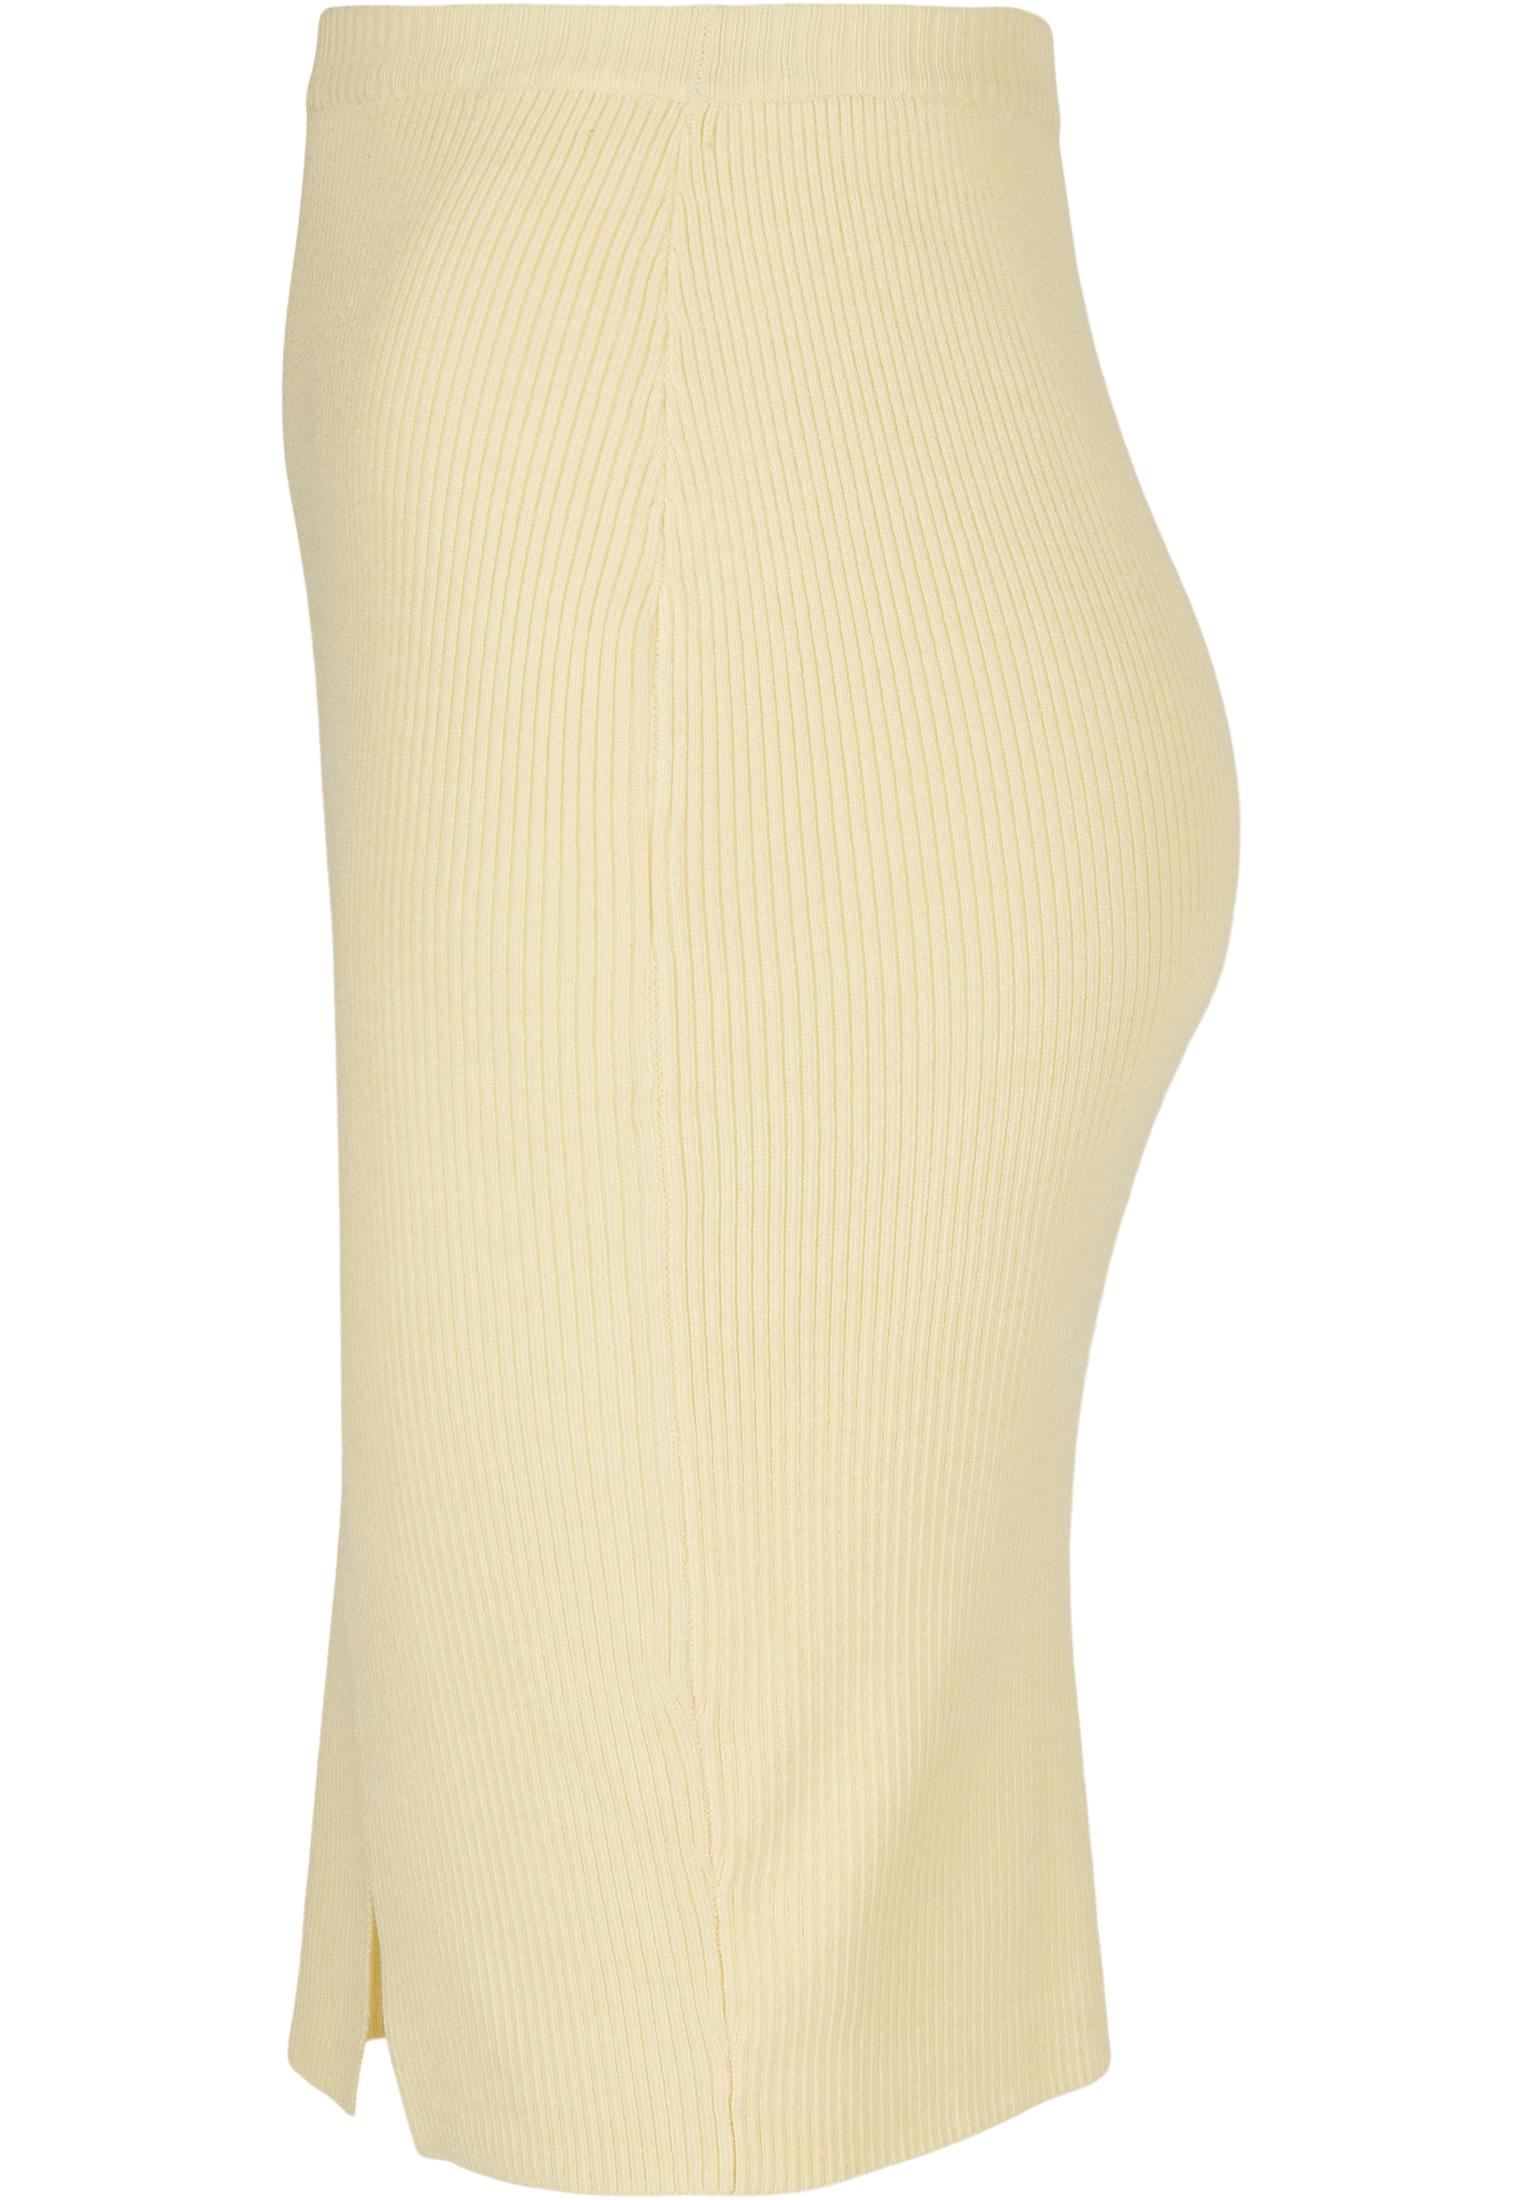 Kleider & R?cke Ladies Rib Knit Skirt in Farbe softyellow